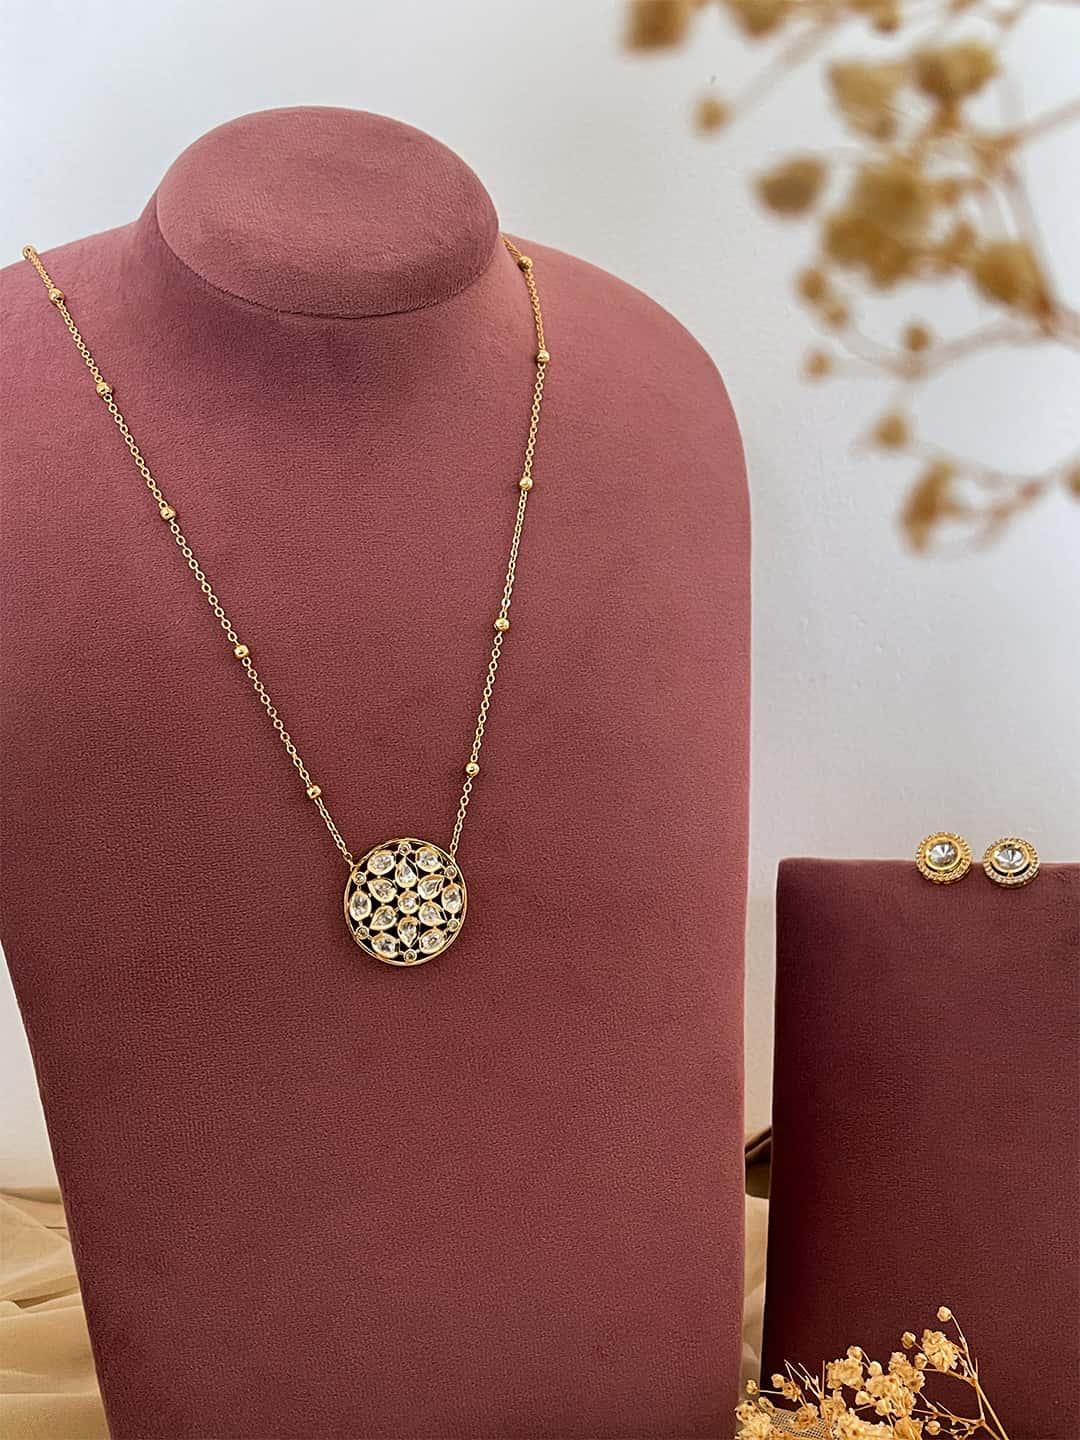 Ishhaara Gold Plated Flower Design Pendant Necklace